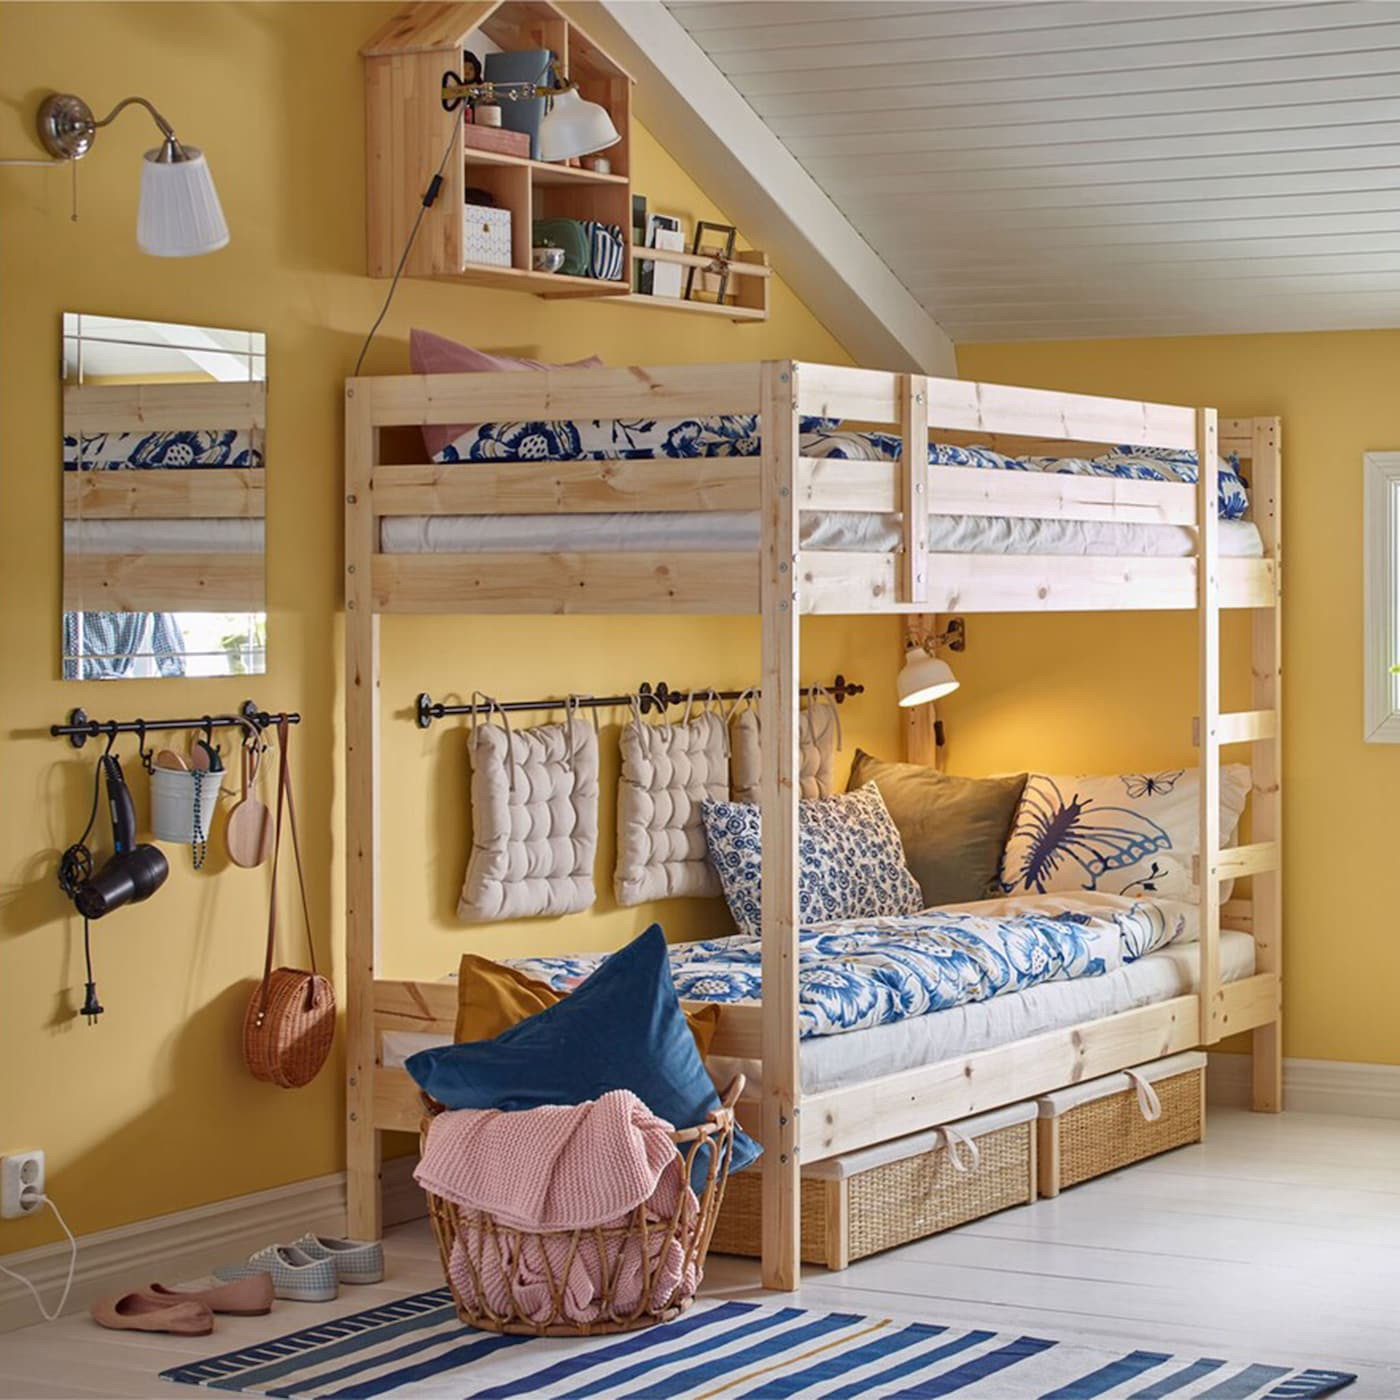 Ikea Small Bedroom
 Getting big ideas into a small shared bedrooms IKEA Ireland